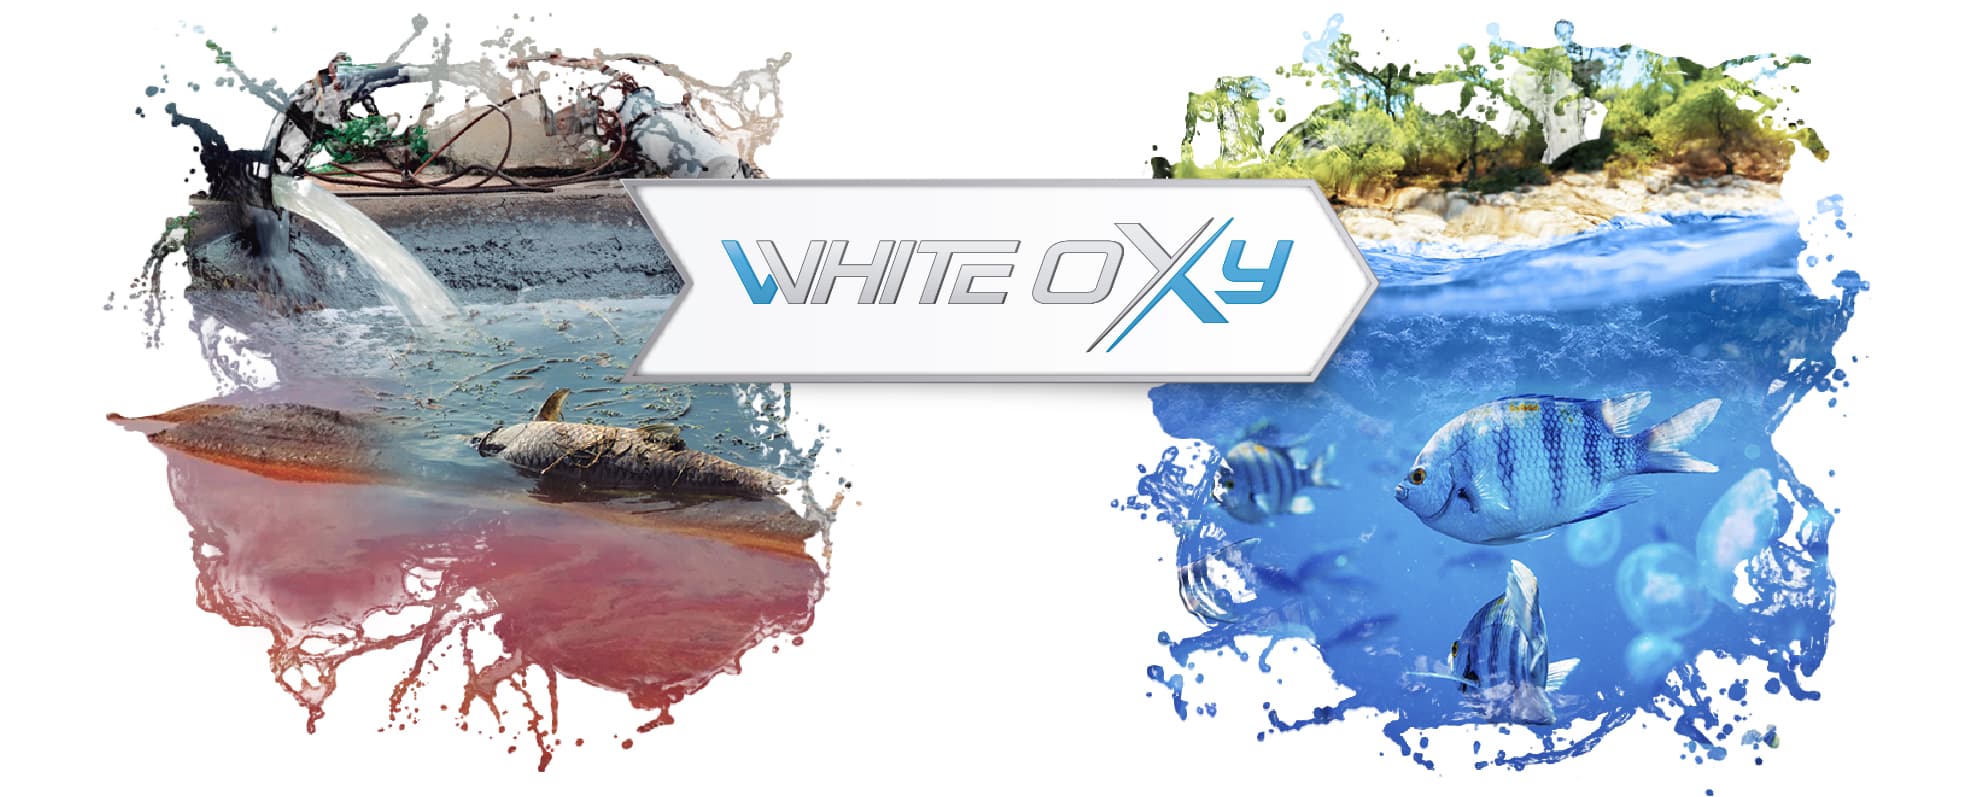 White Oxy – Oxidación avanzada para destruccion de contaminantes remanentes